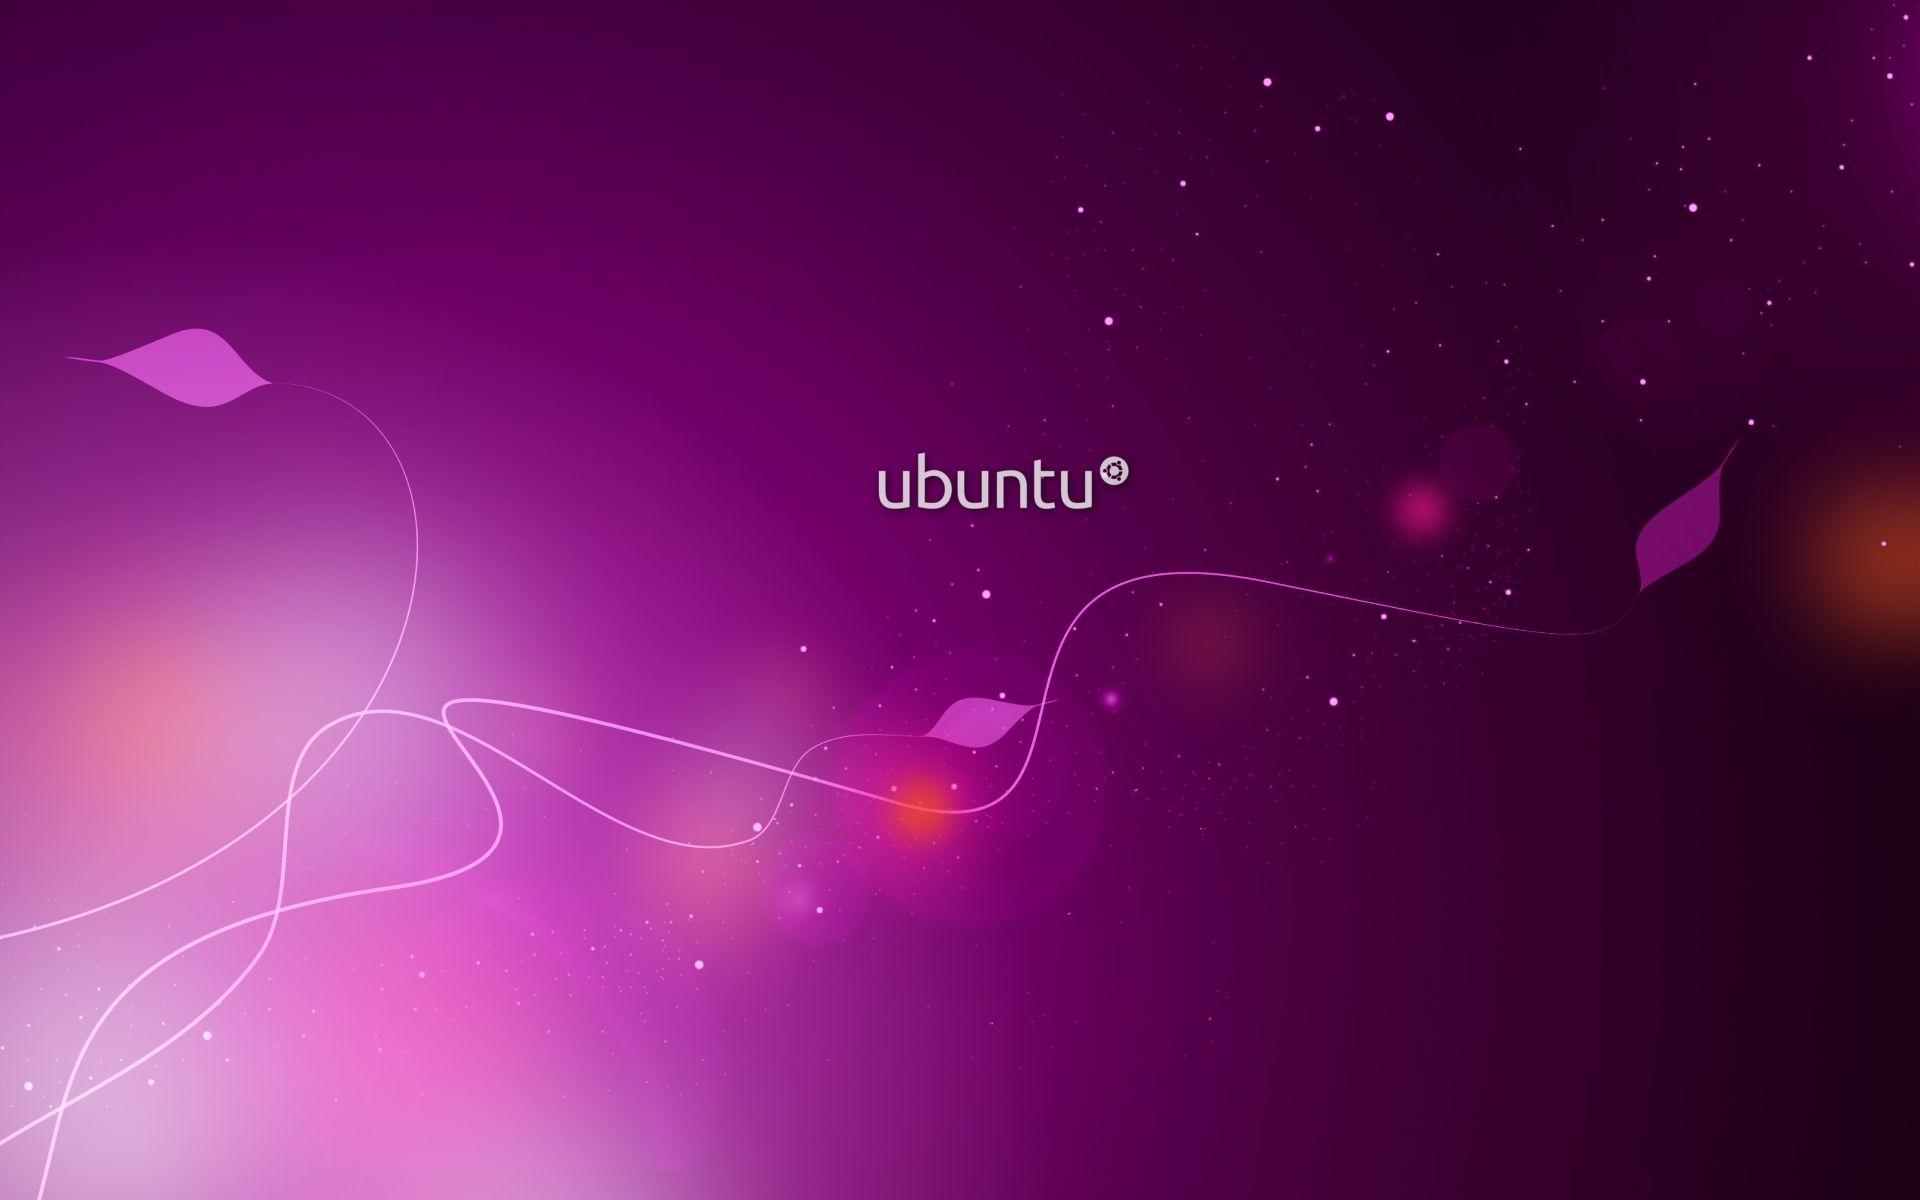 Beautiful Ubuntu Wallpaper Design Cool idolza